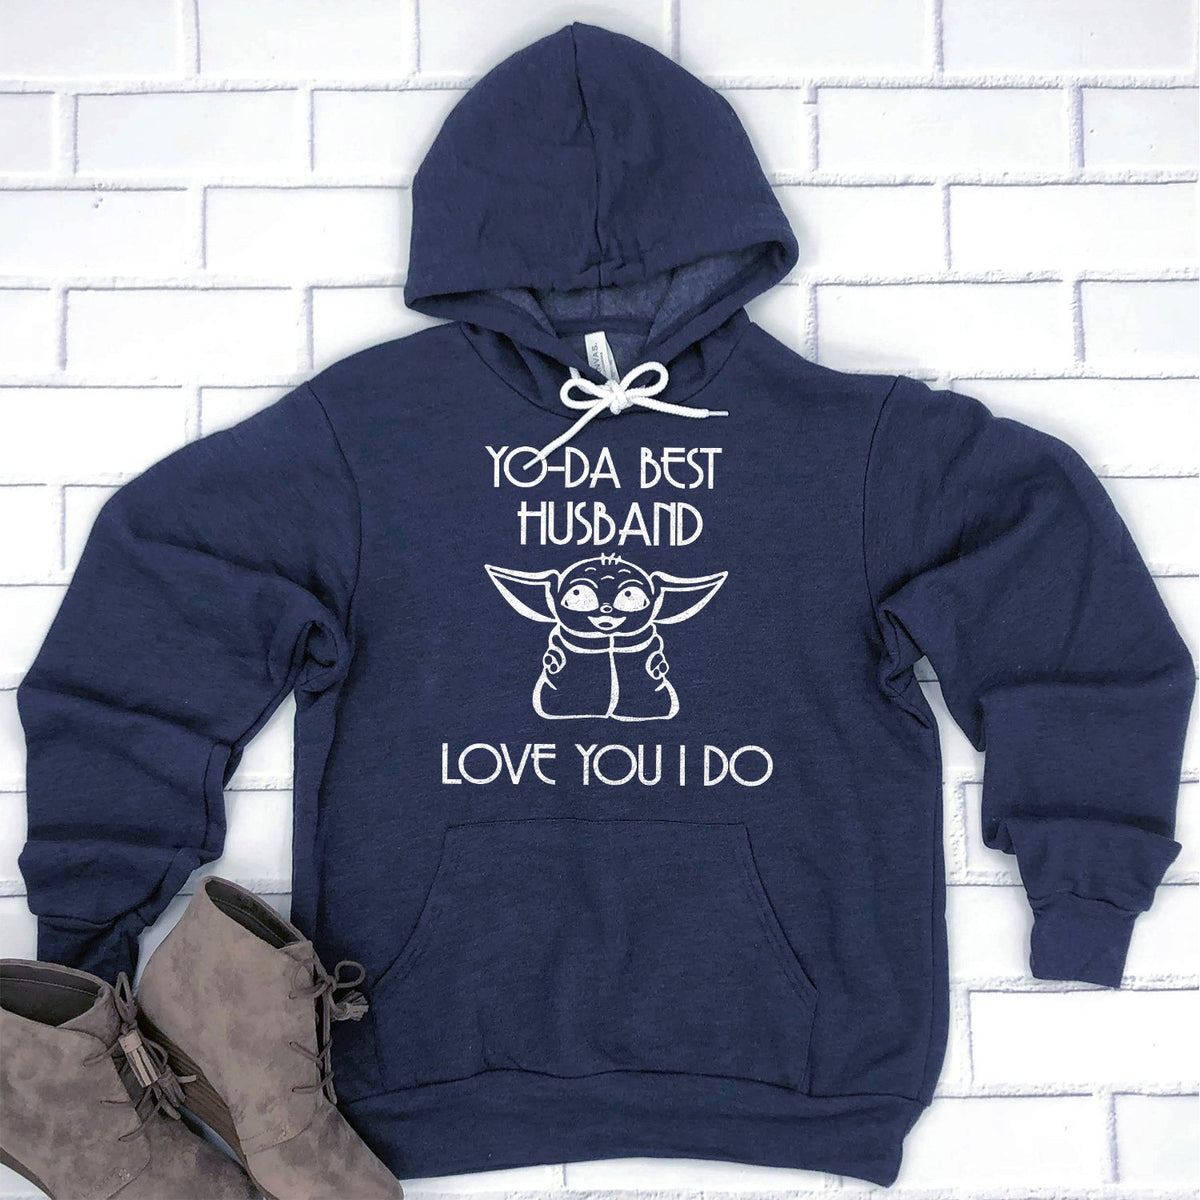 Yo-Da Best Husband Love You I Do - Hoodie Sweatshirt